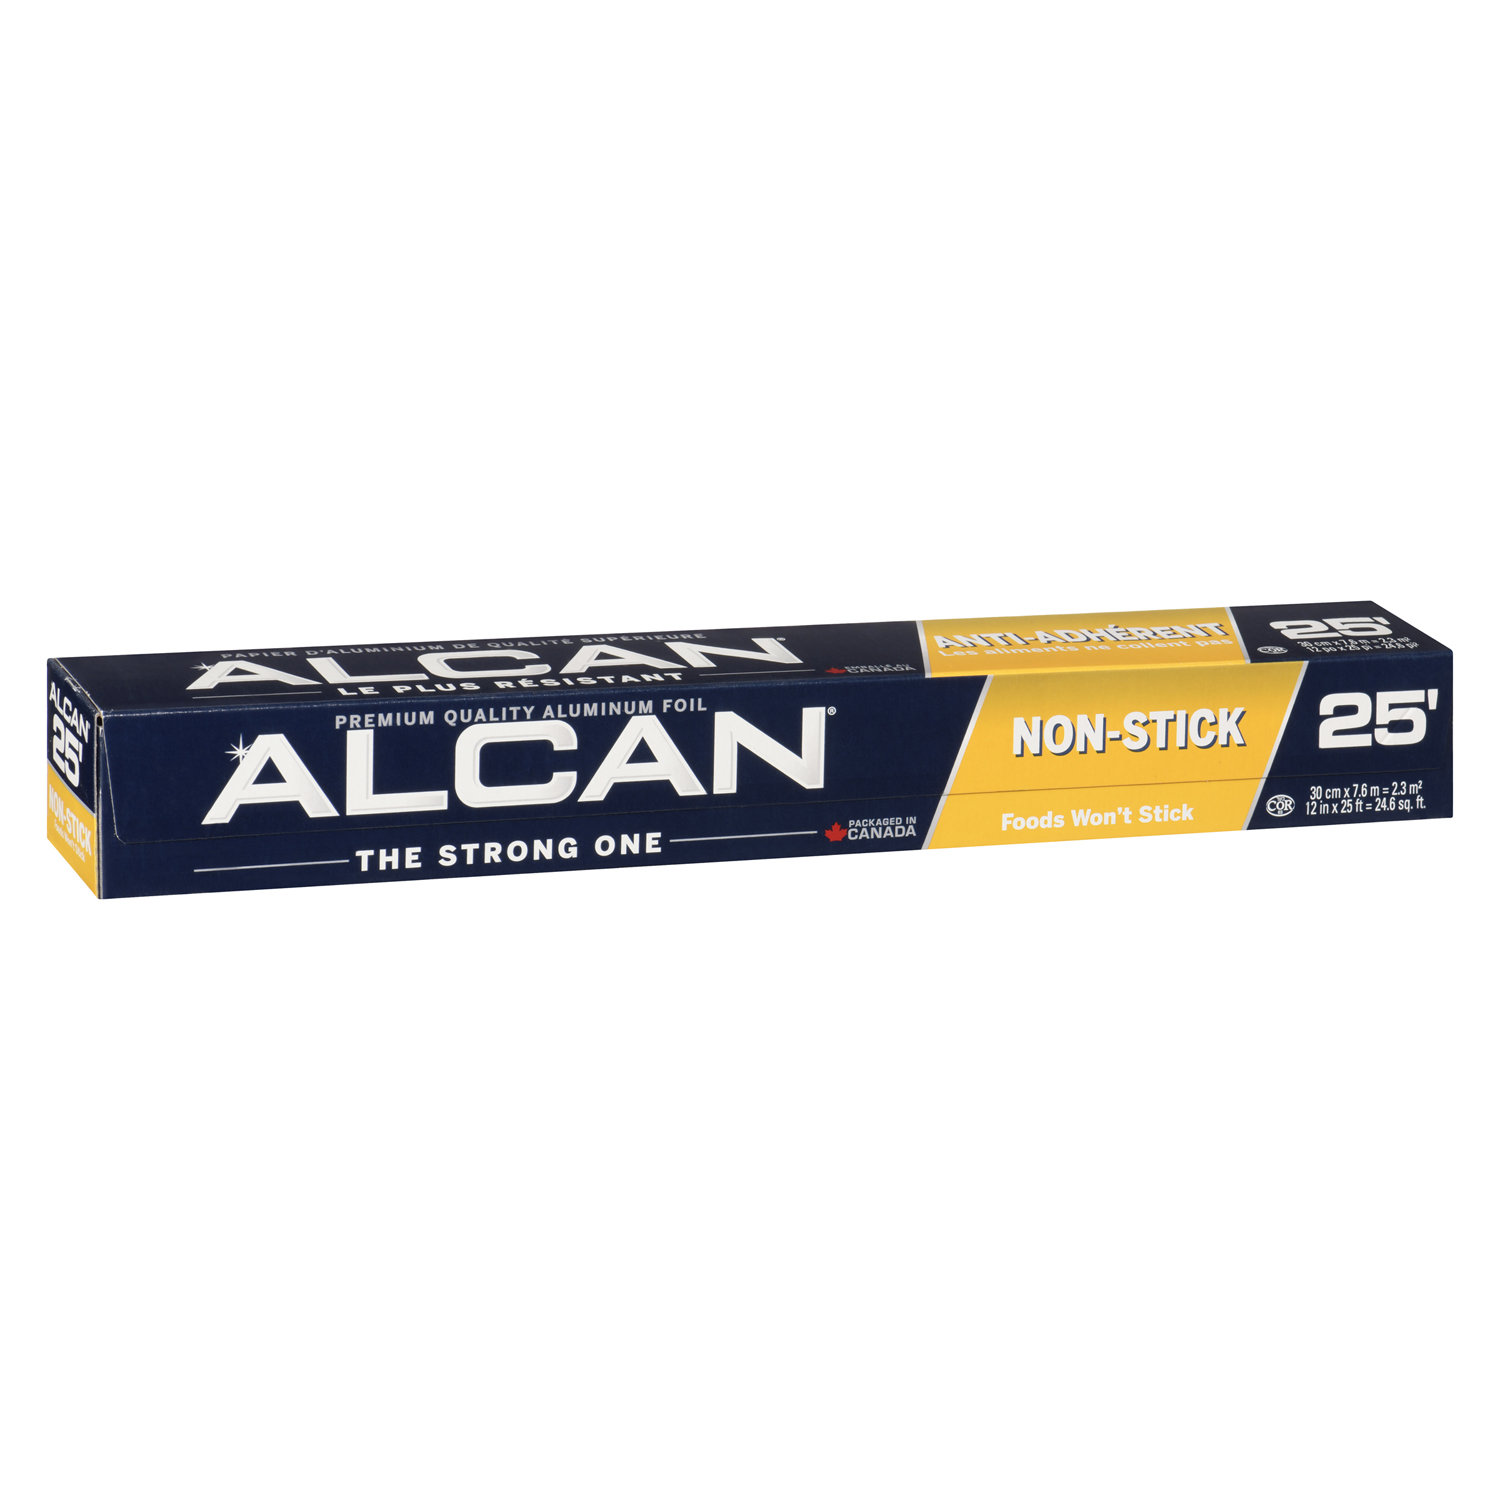 Alcan - Aluminum Foil Non Stick - 25' - Save-On-Foods